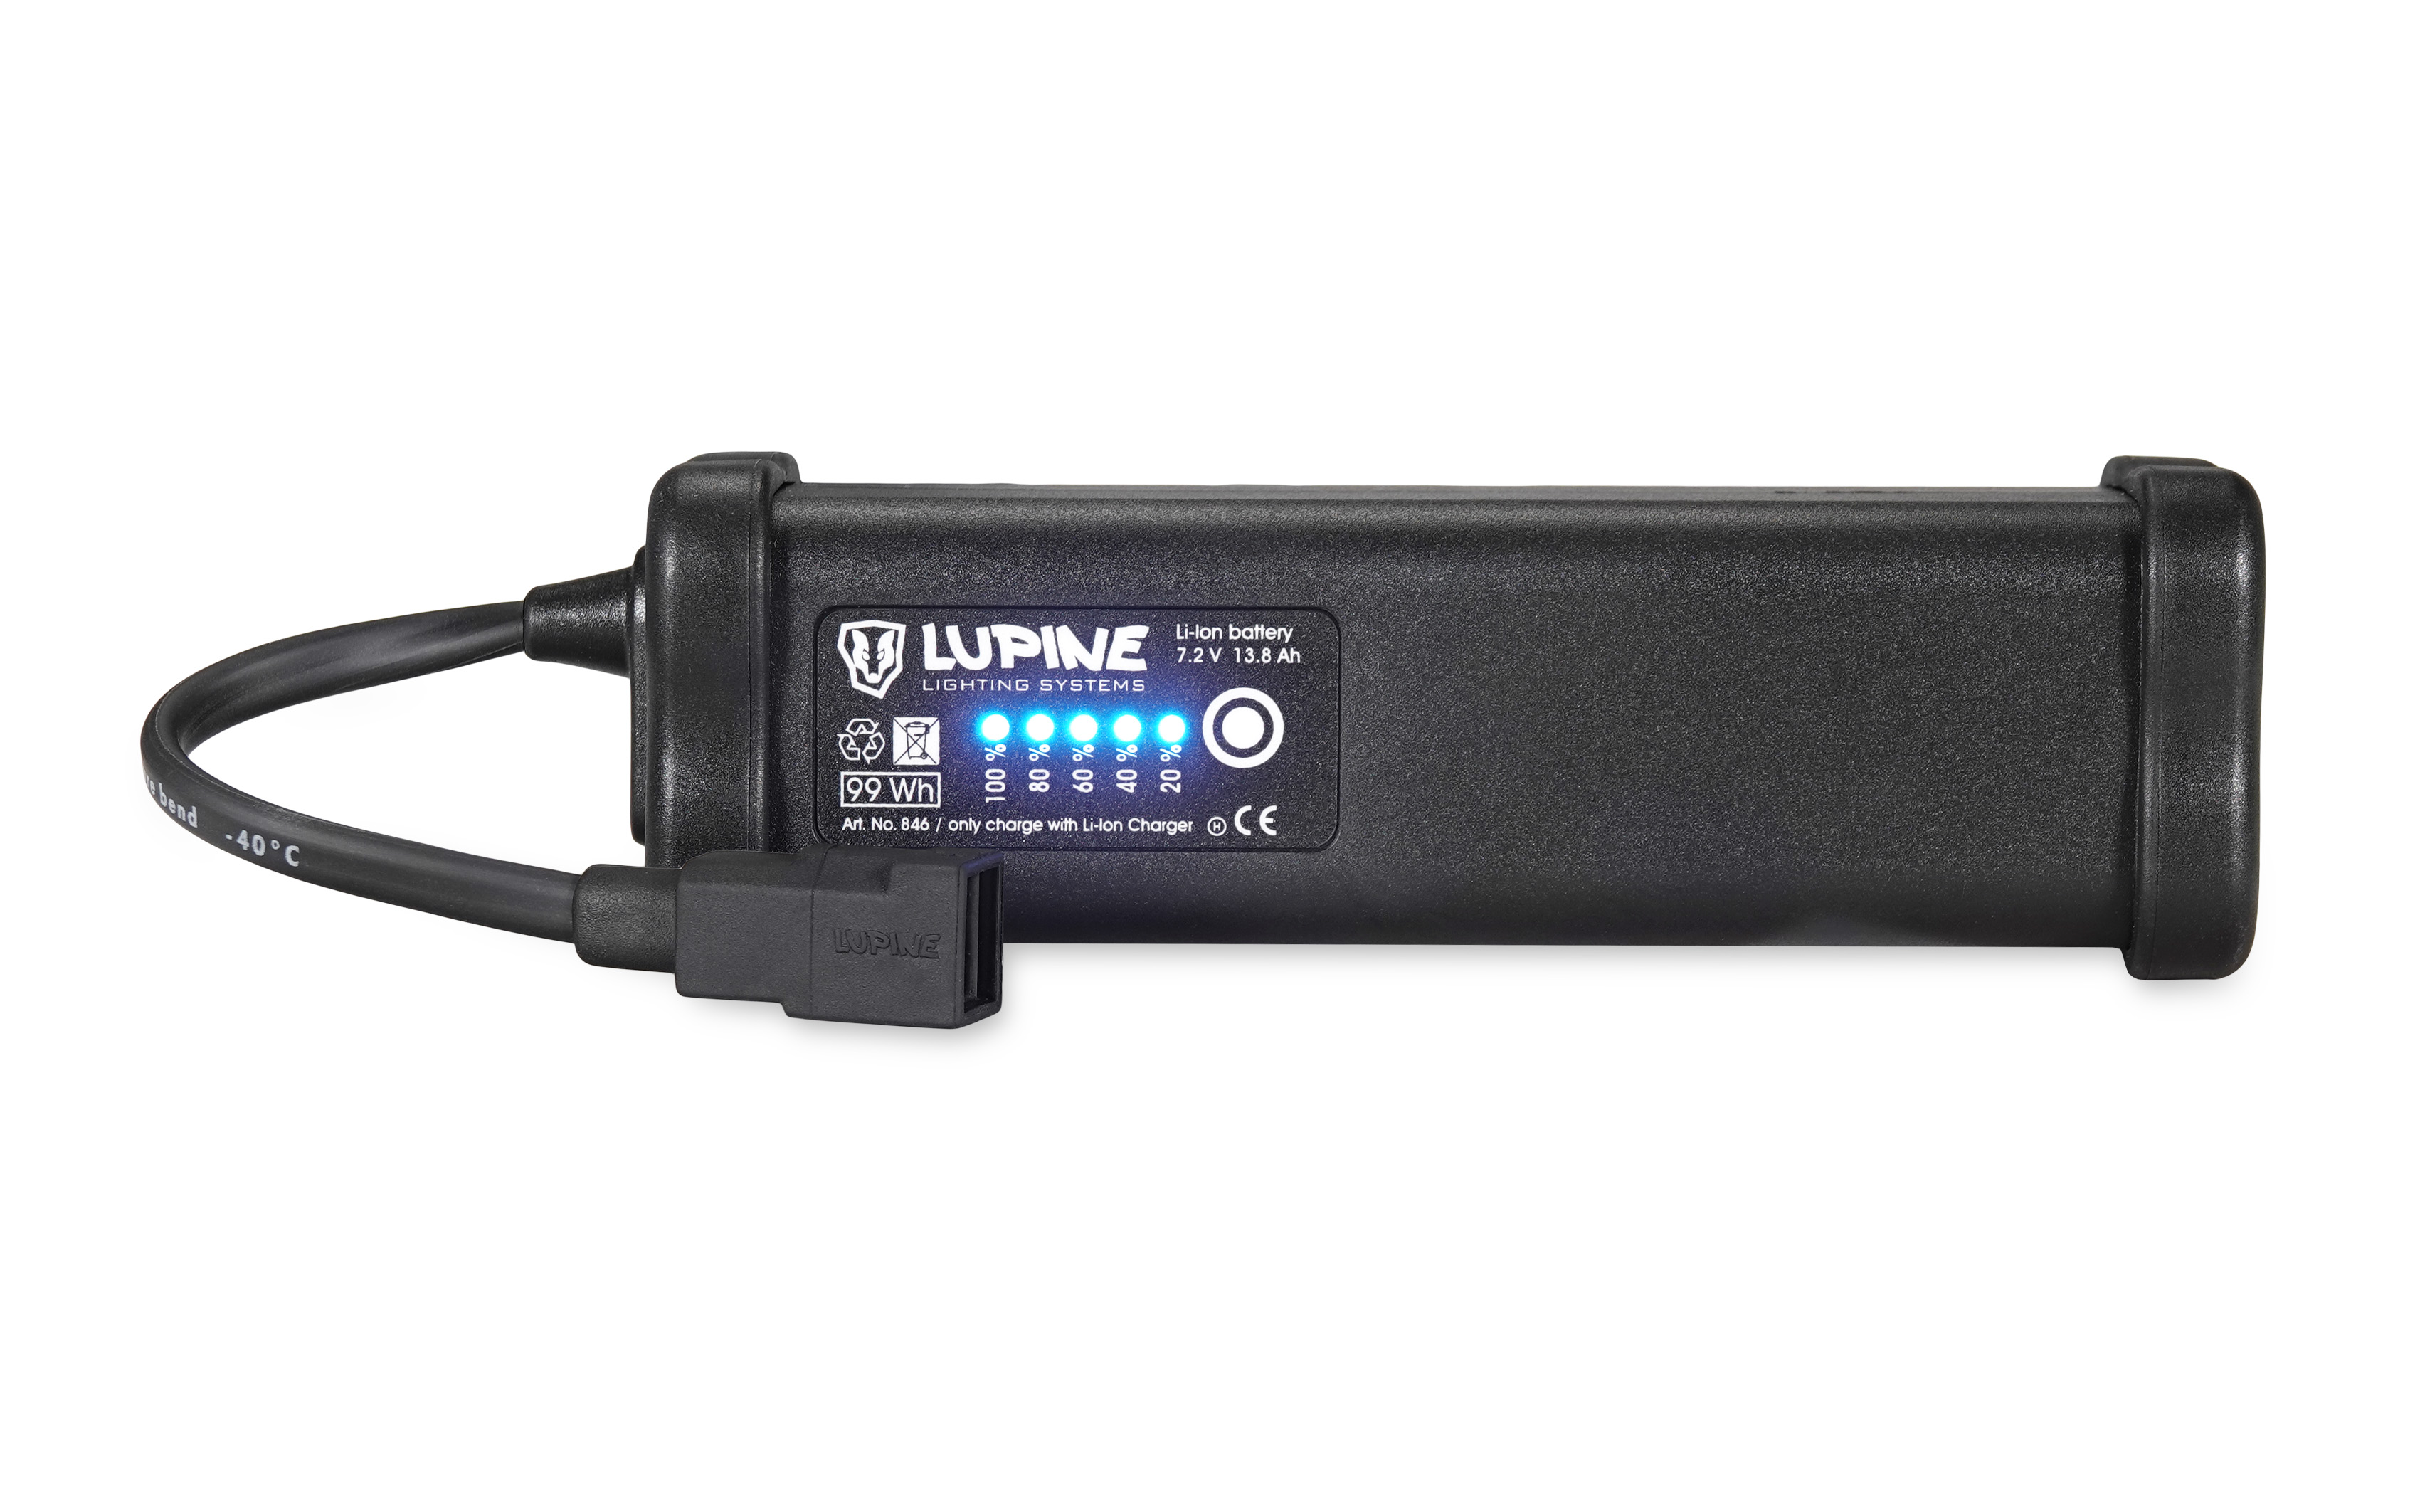 13.8 Ah Smartcore Battery